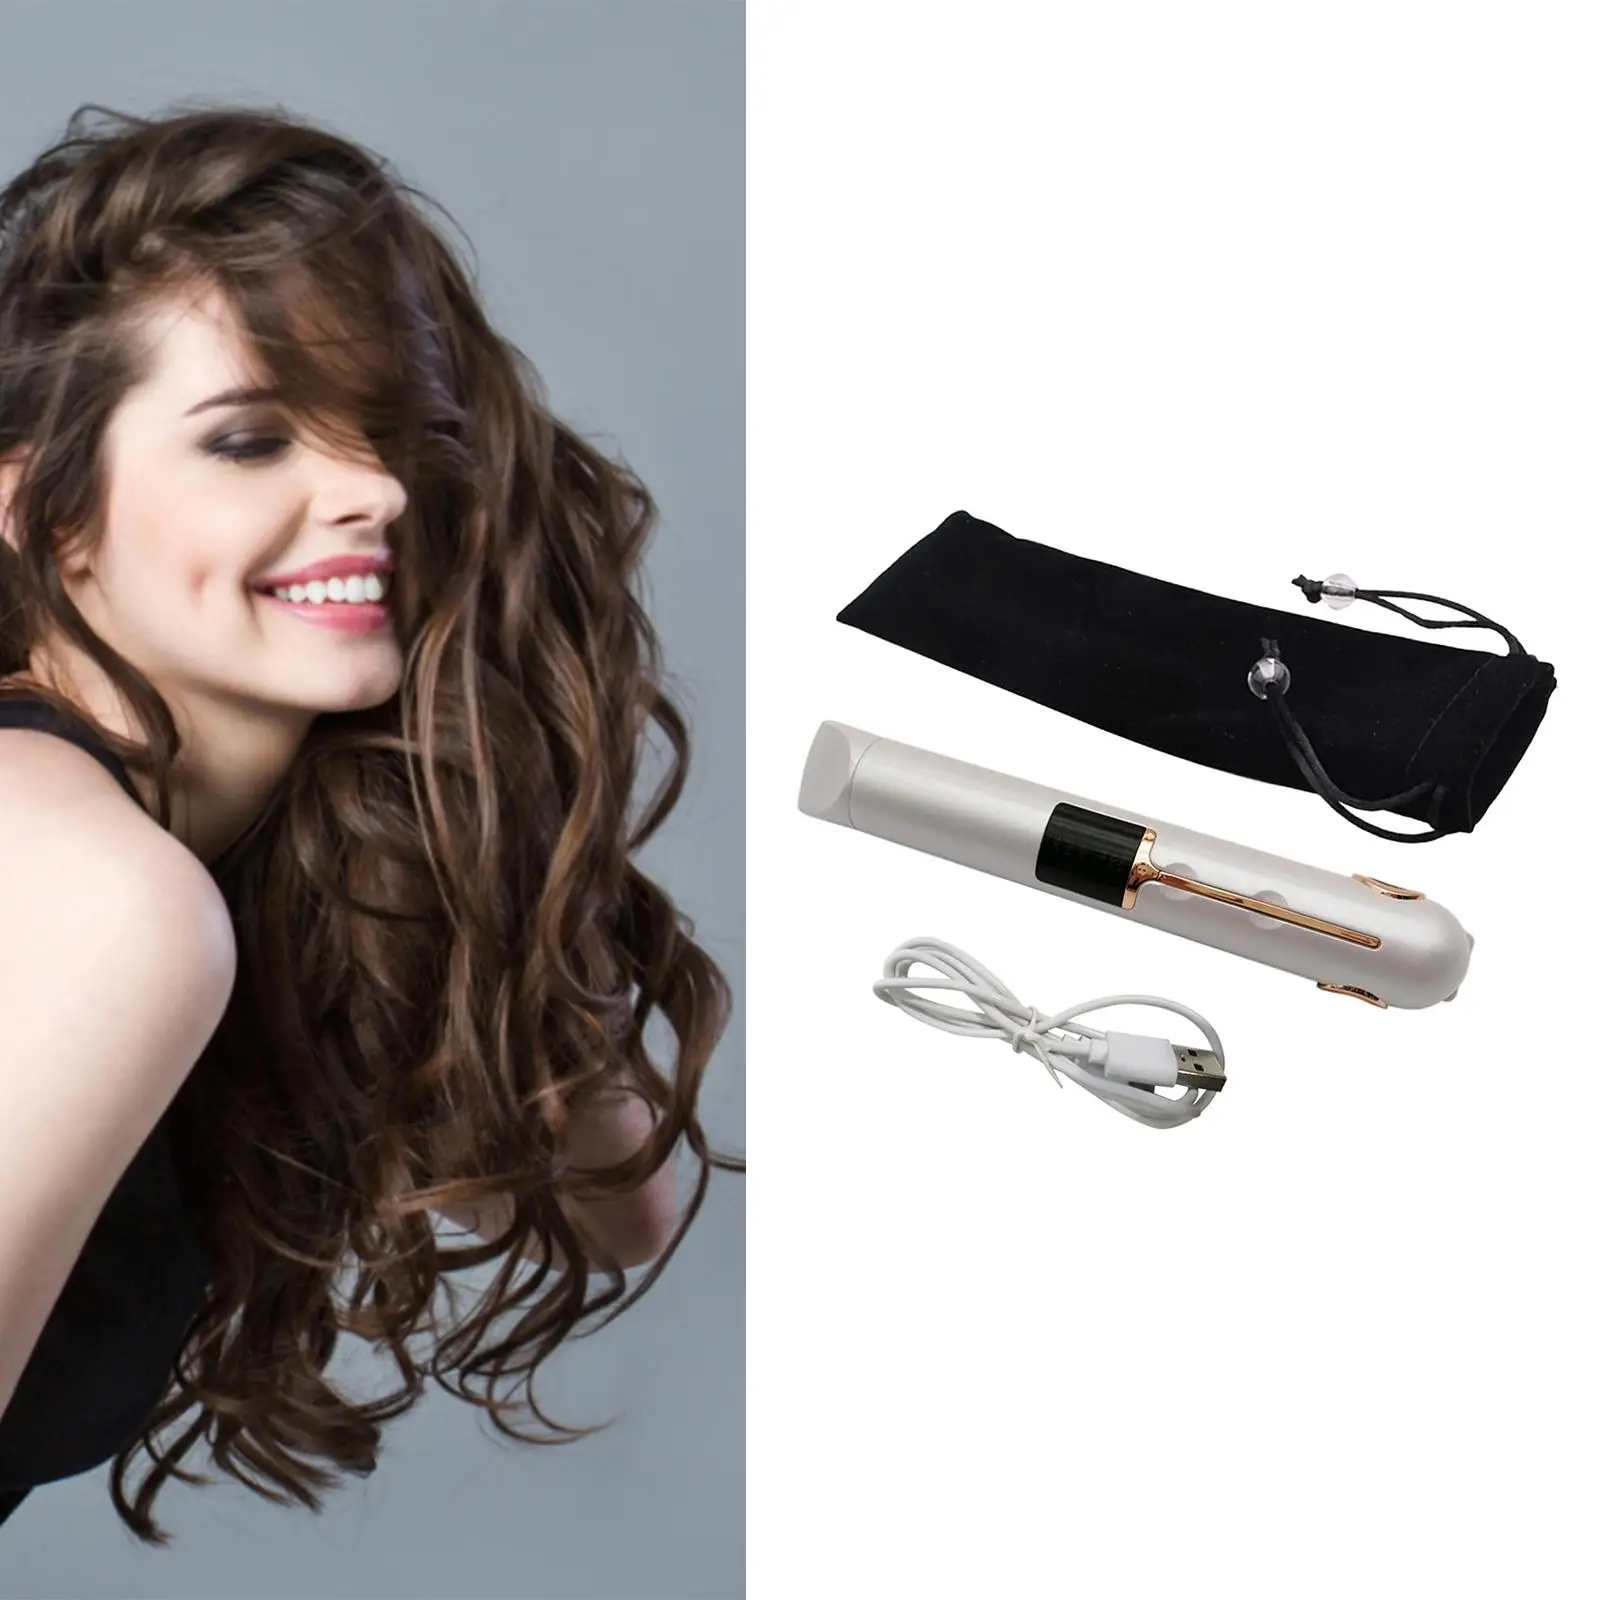 Portable Cordless Hair Curler Straightener 3-Level Temp Automatic ABS Power Bank for Salon Curls DIY Hair Styling Women Men